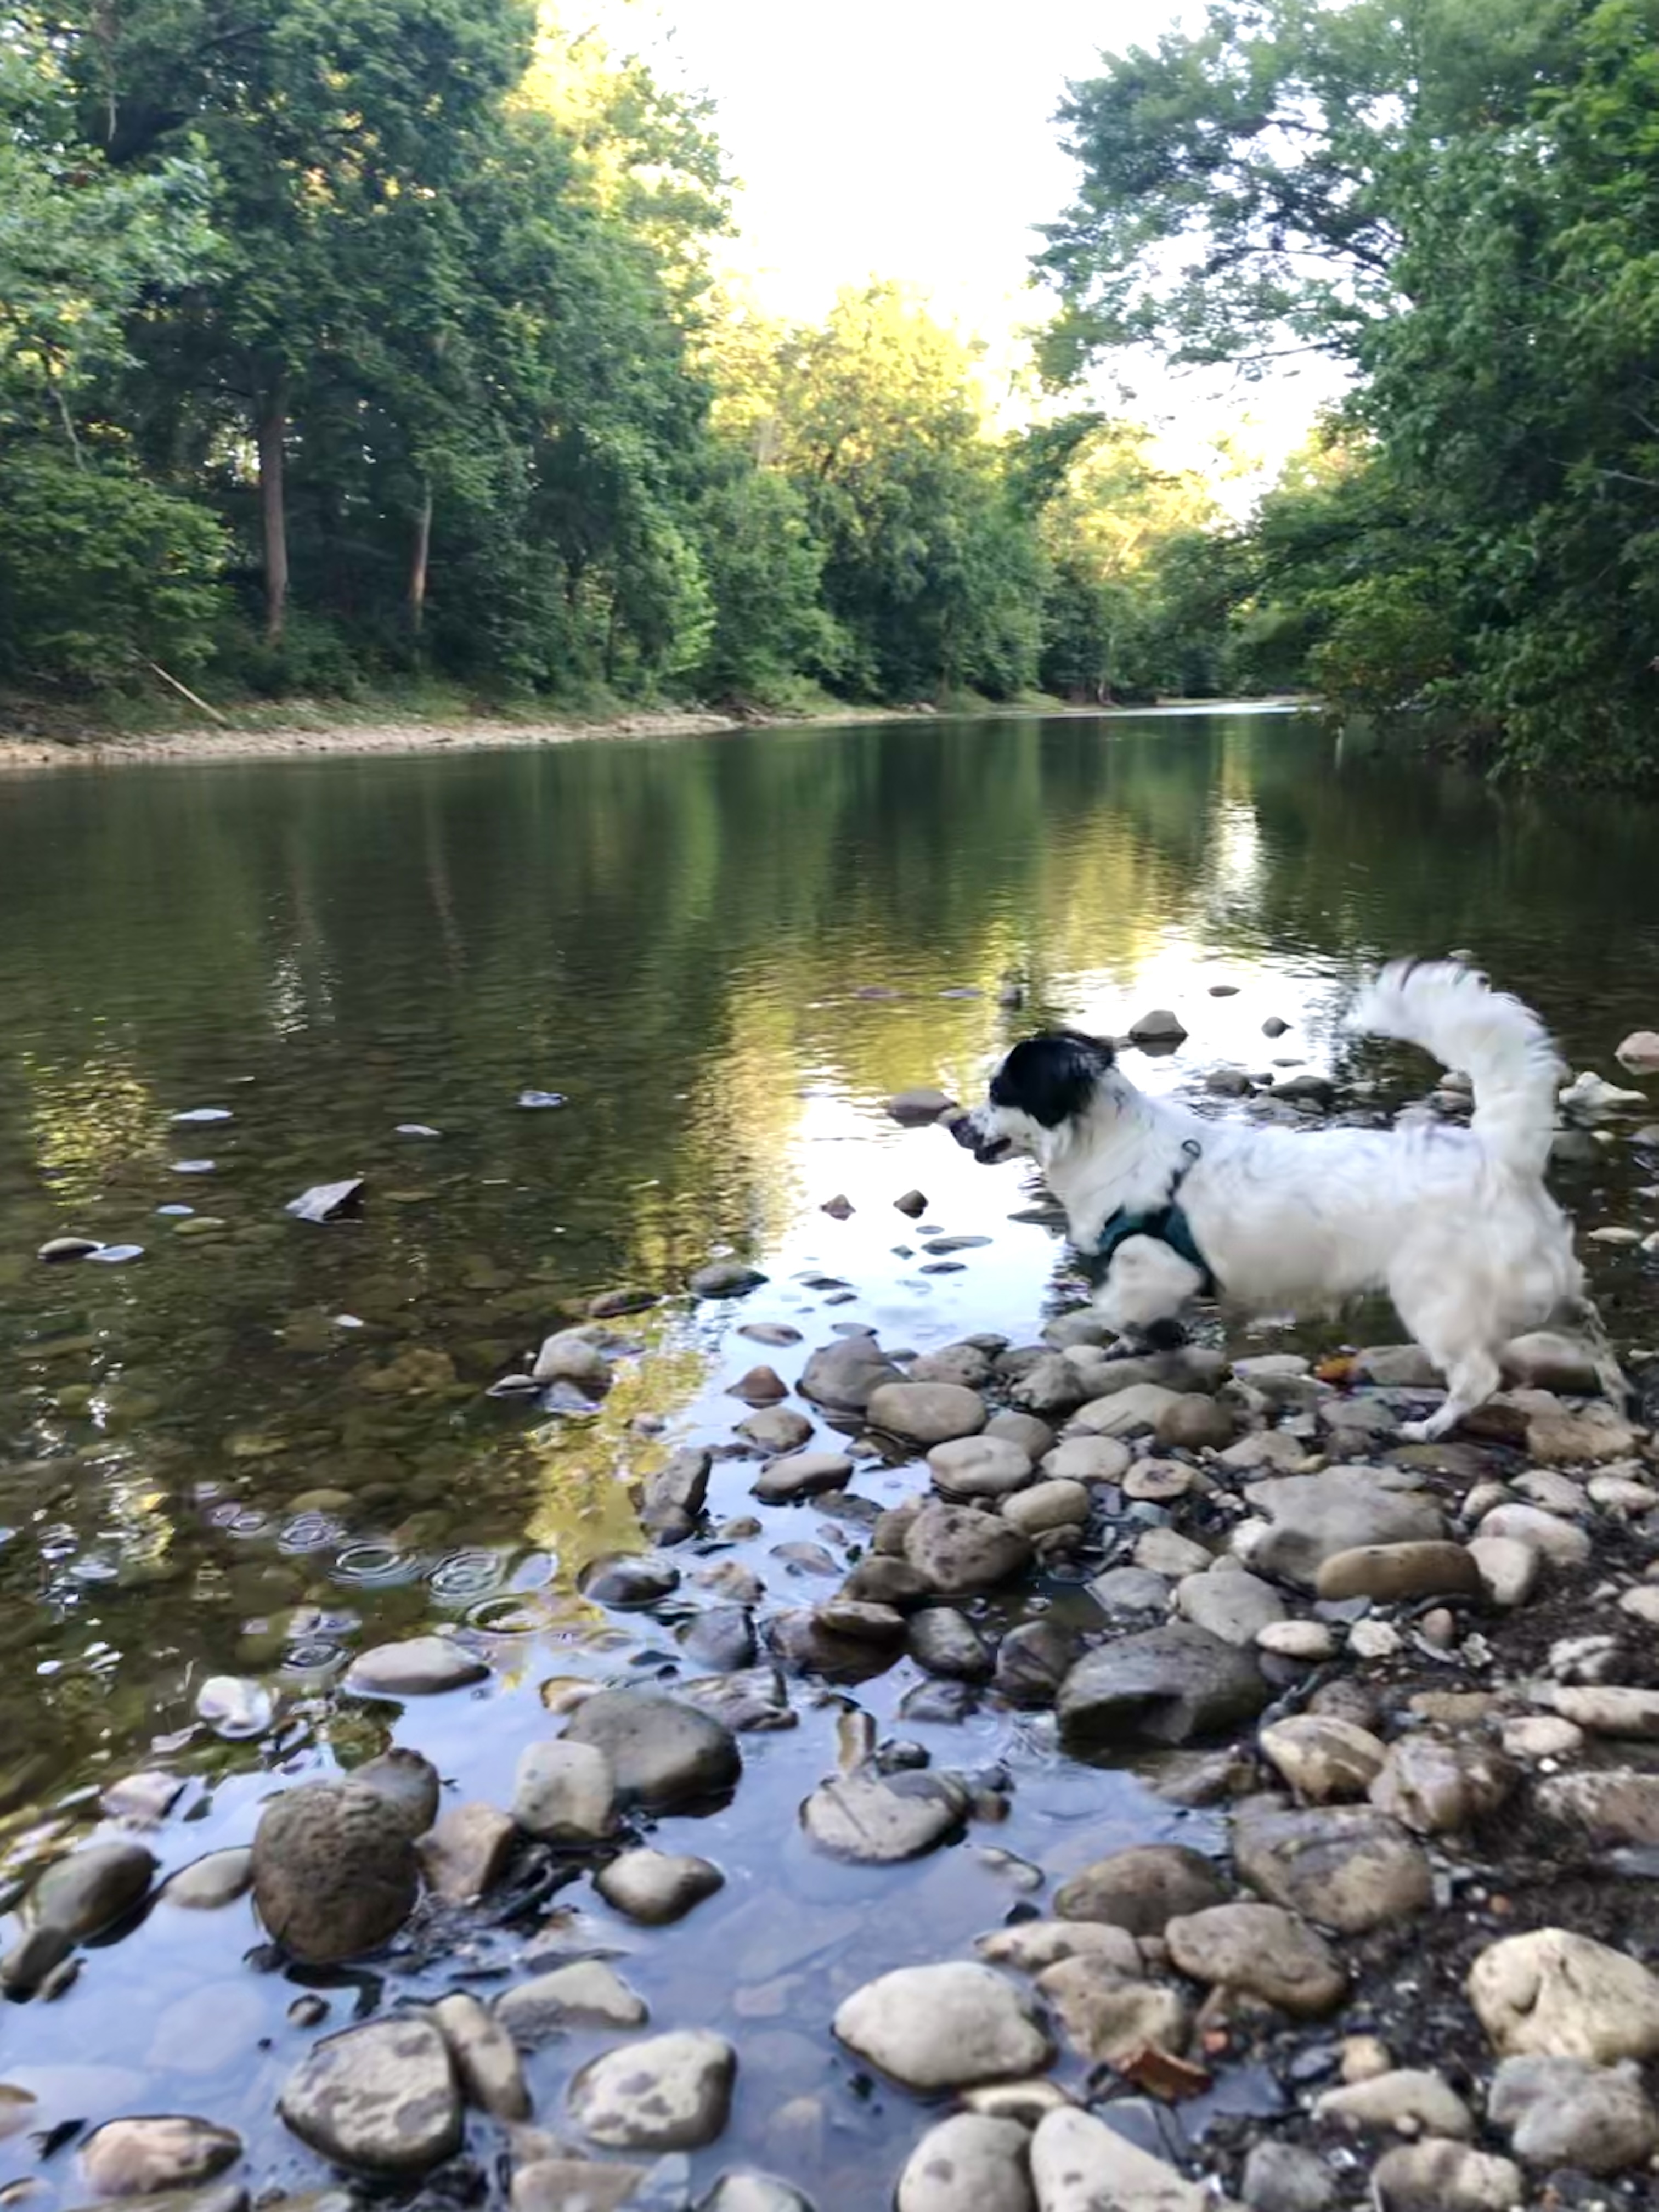 Small dog along rocky river bank